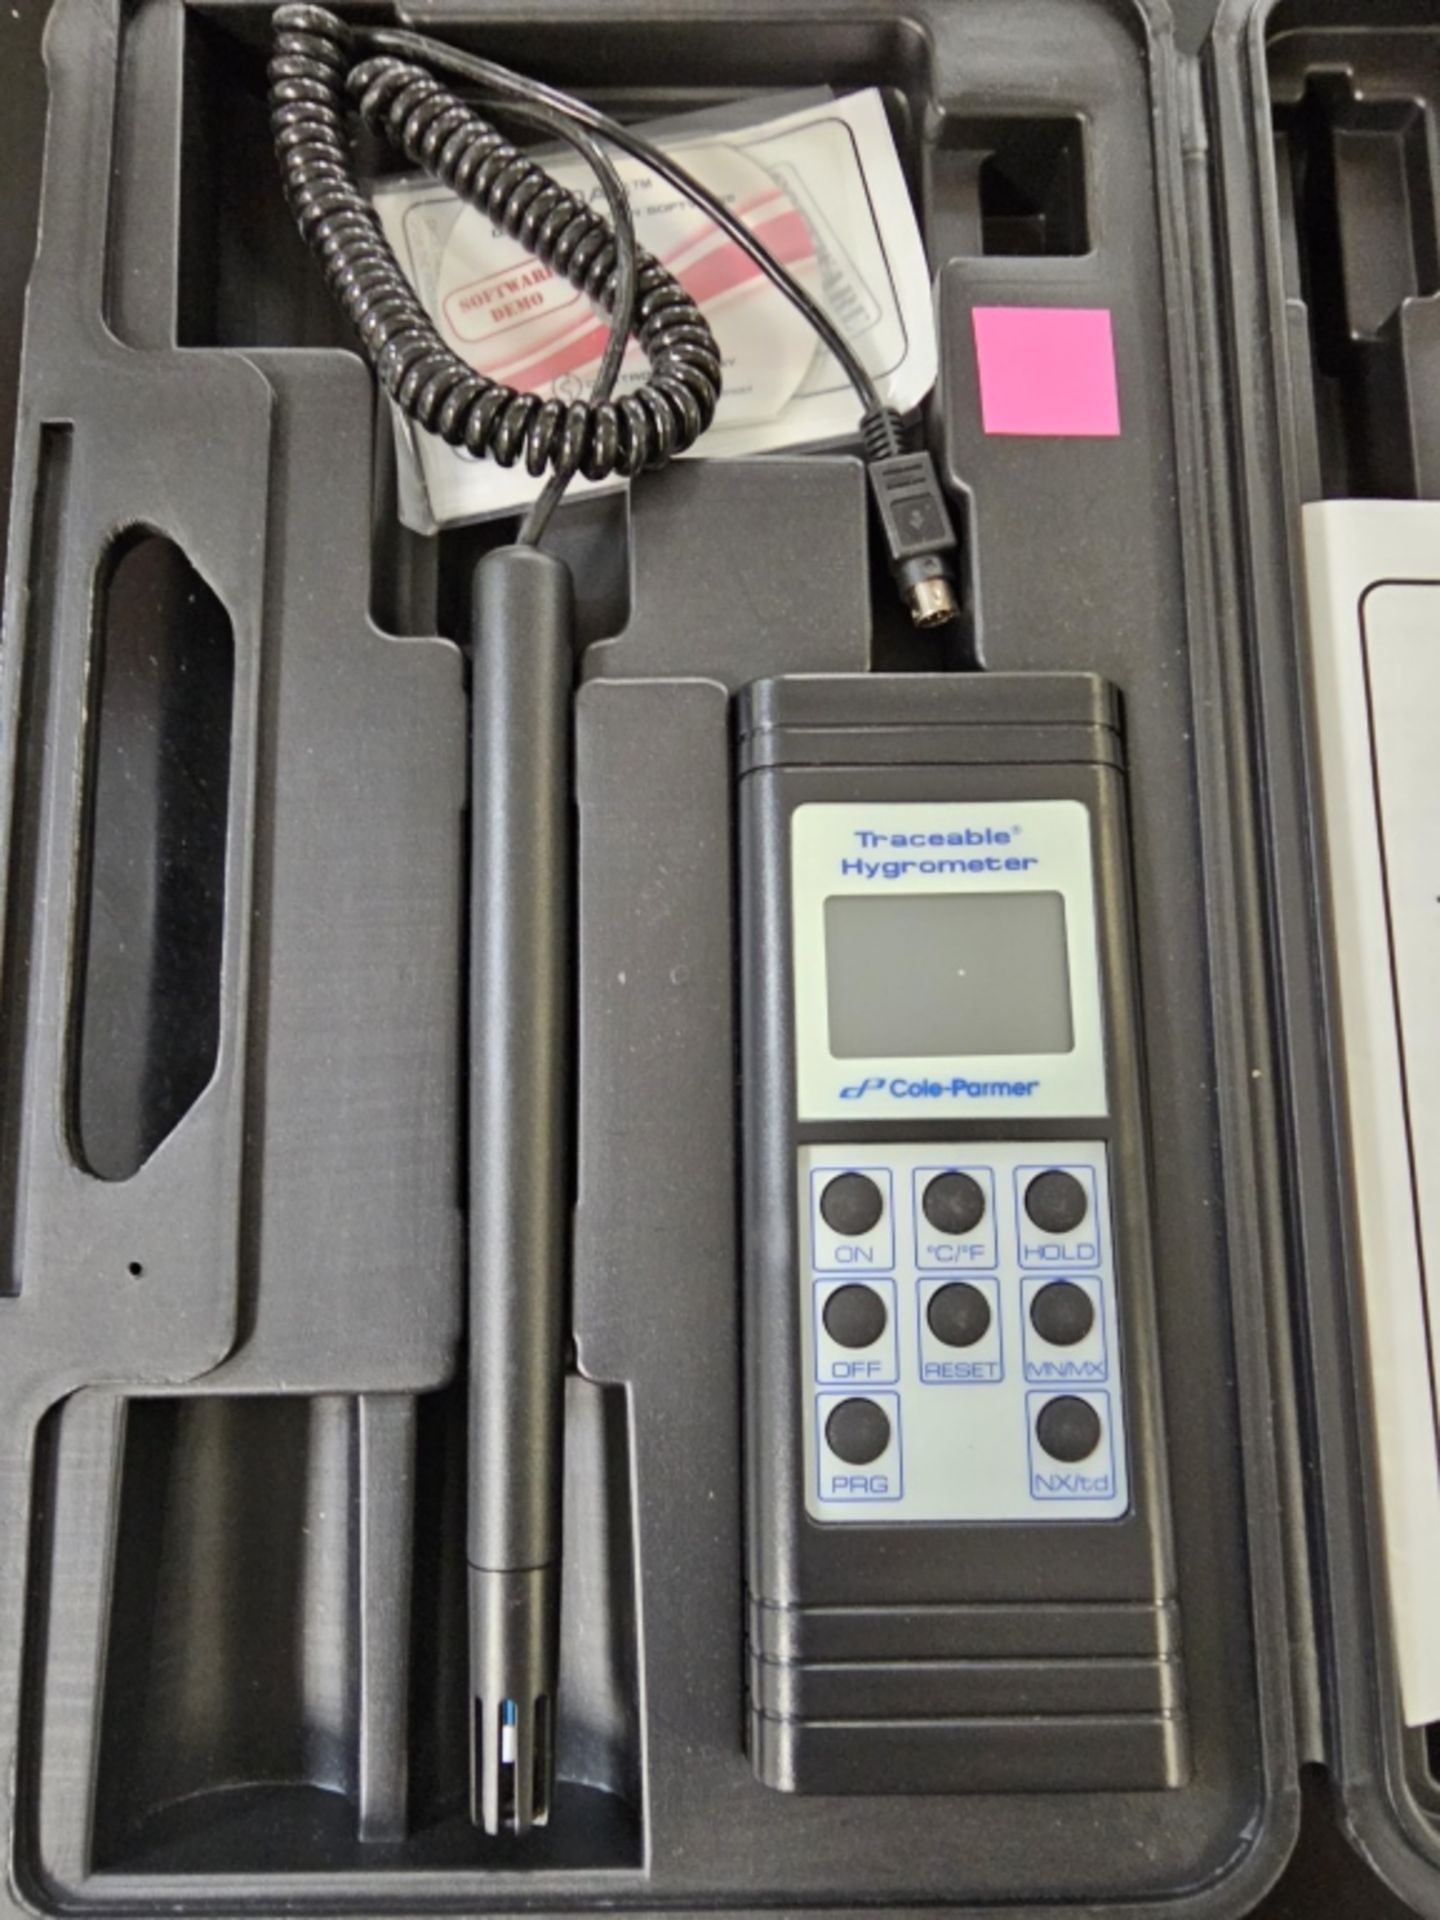 Digital Handheld Hygrometer / Thermometer - Image 3 of 5